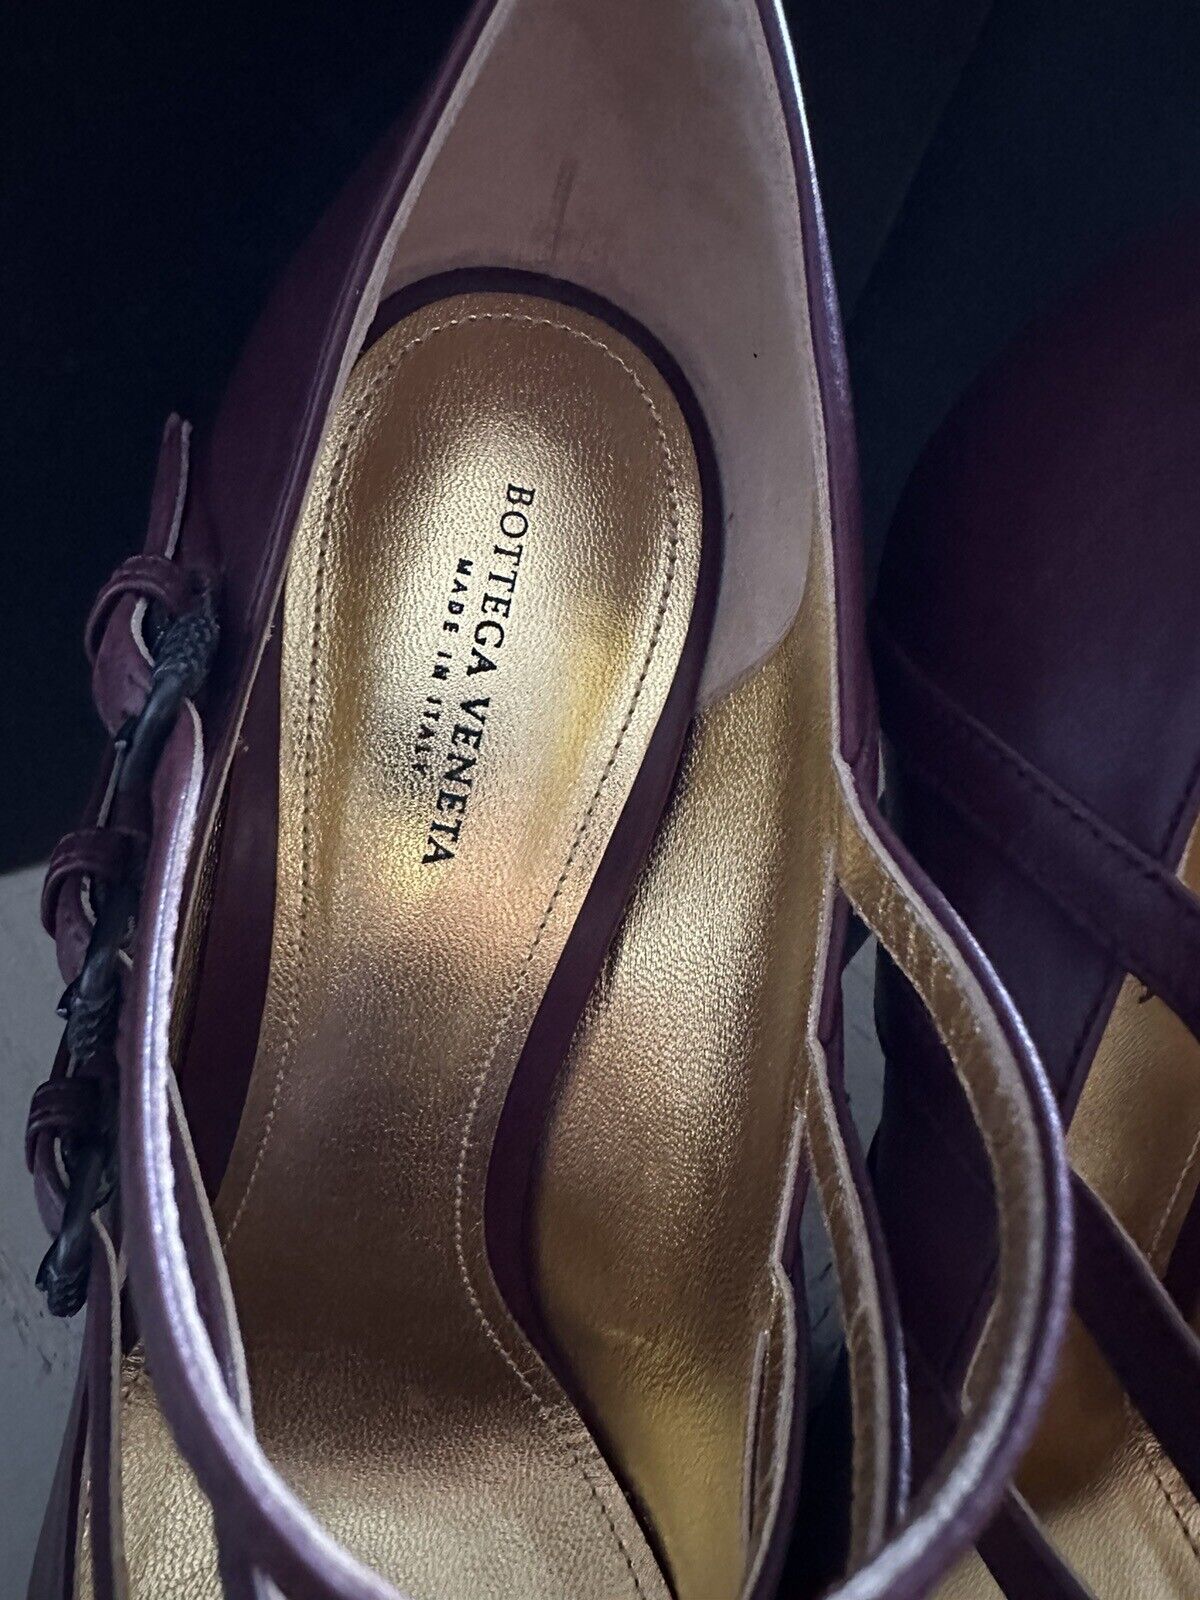 NIB $749 Bottega Veneta Women’s Leather Shoes Burgundy 8.5 US/38.5 Eu